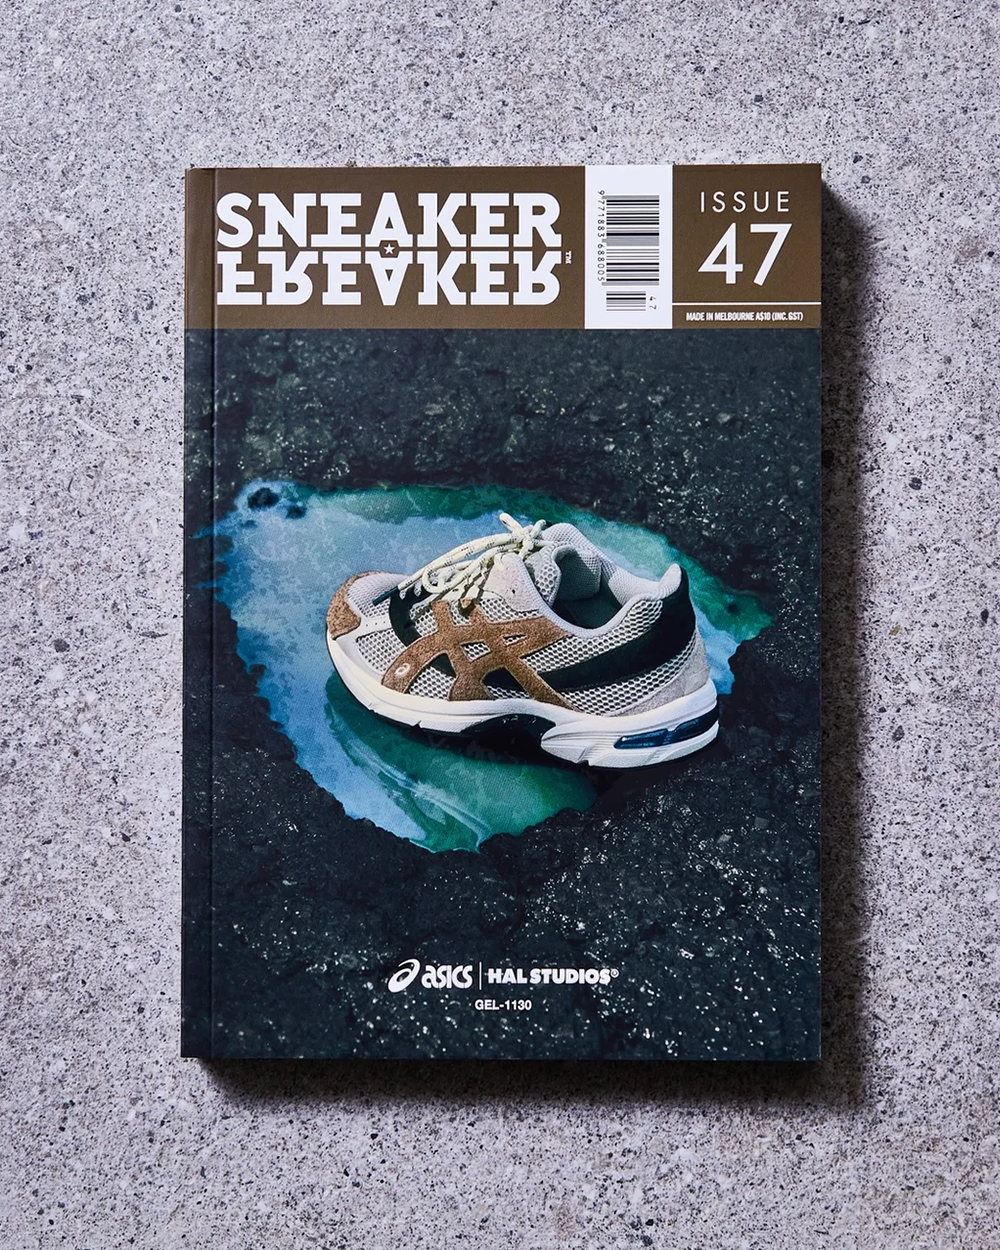 Sneaker Freaker - Issue 47